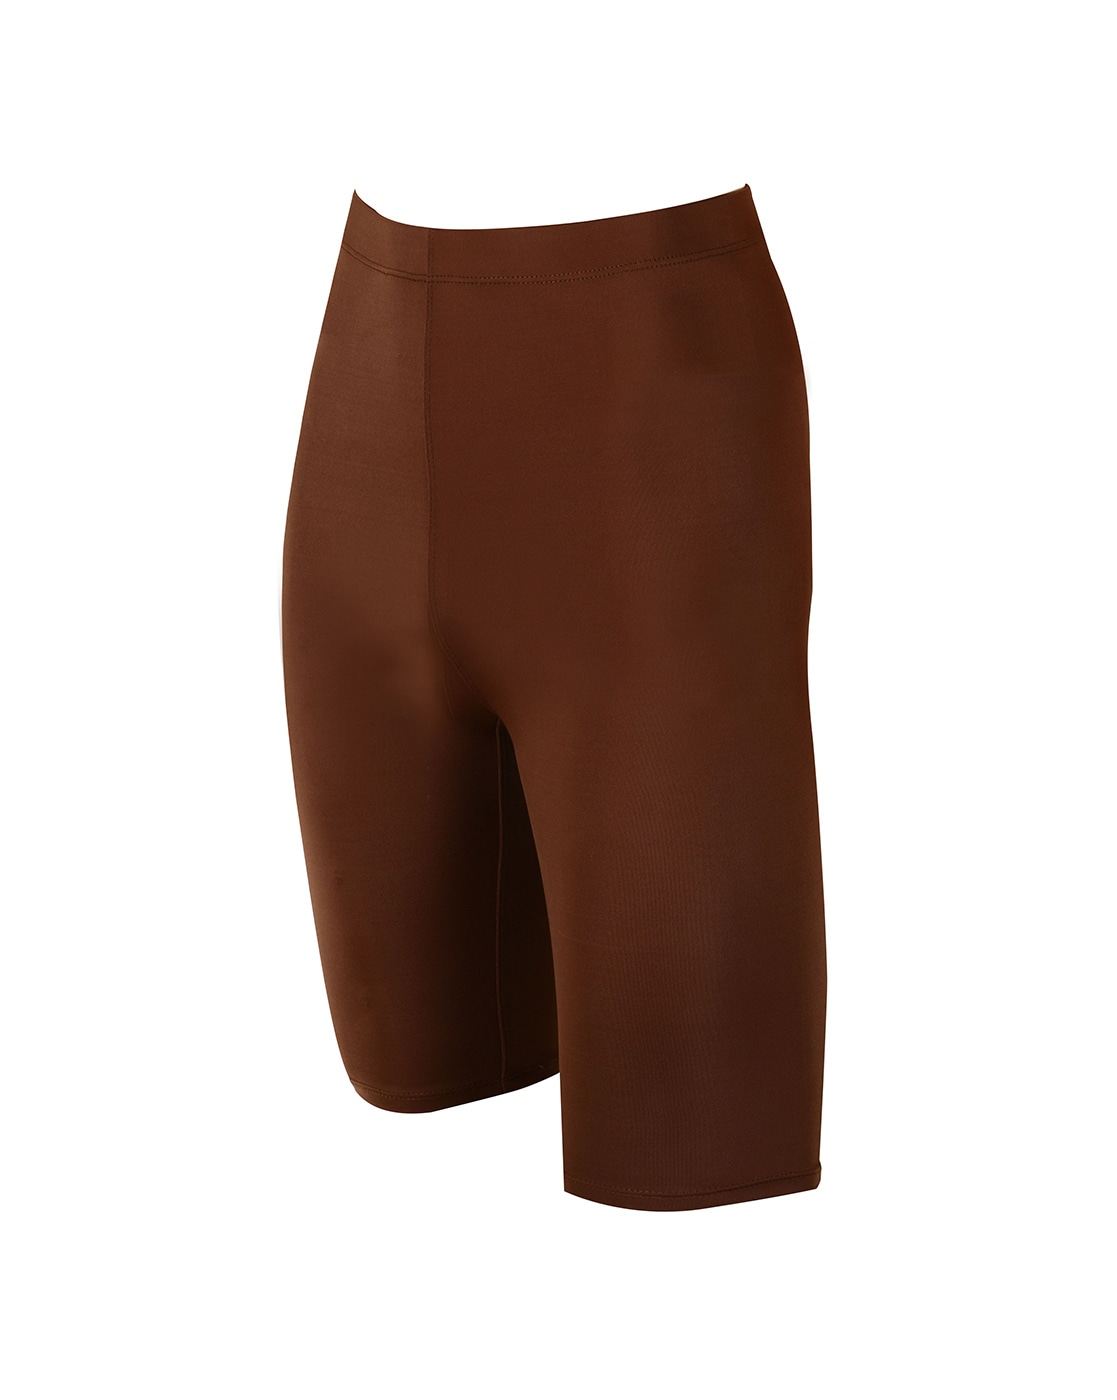 Buy Brown Swimwear for Men by LYCOT Online Ajio